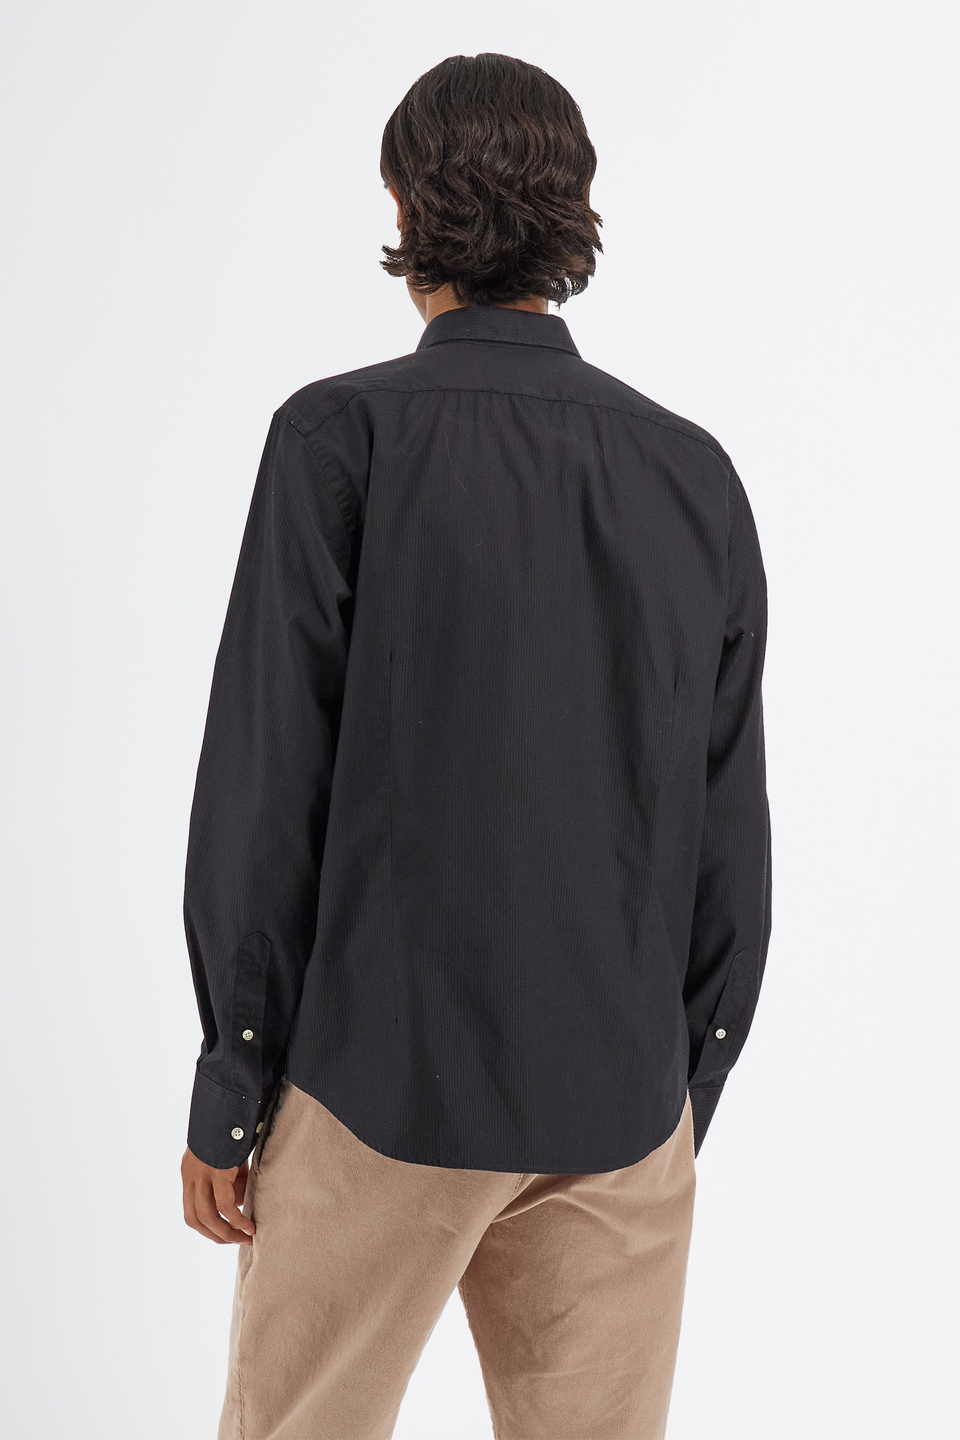 Men’s Guards regular fit cotton long sleeves shirt | La Martina - Official Online Shop